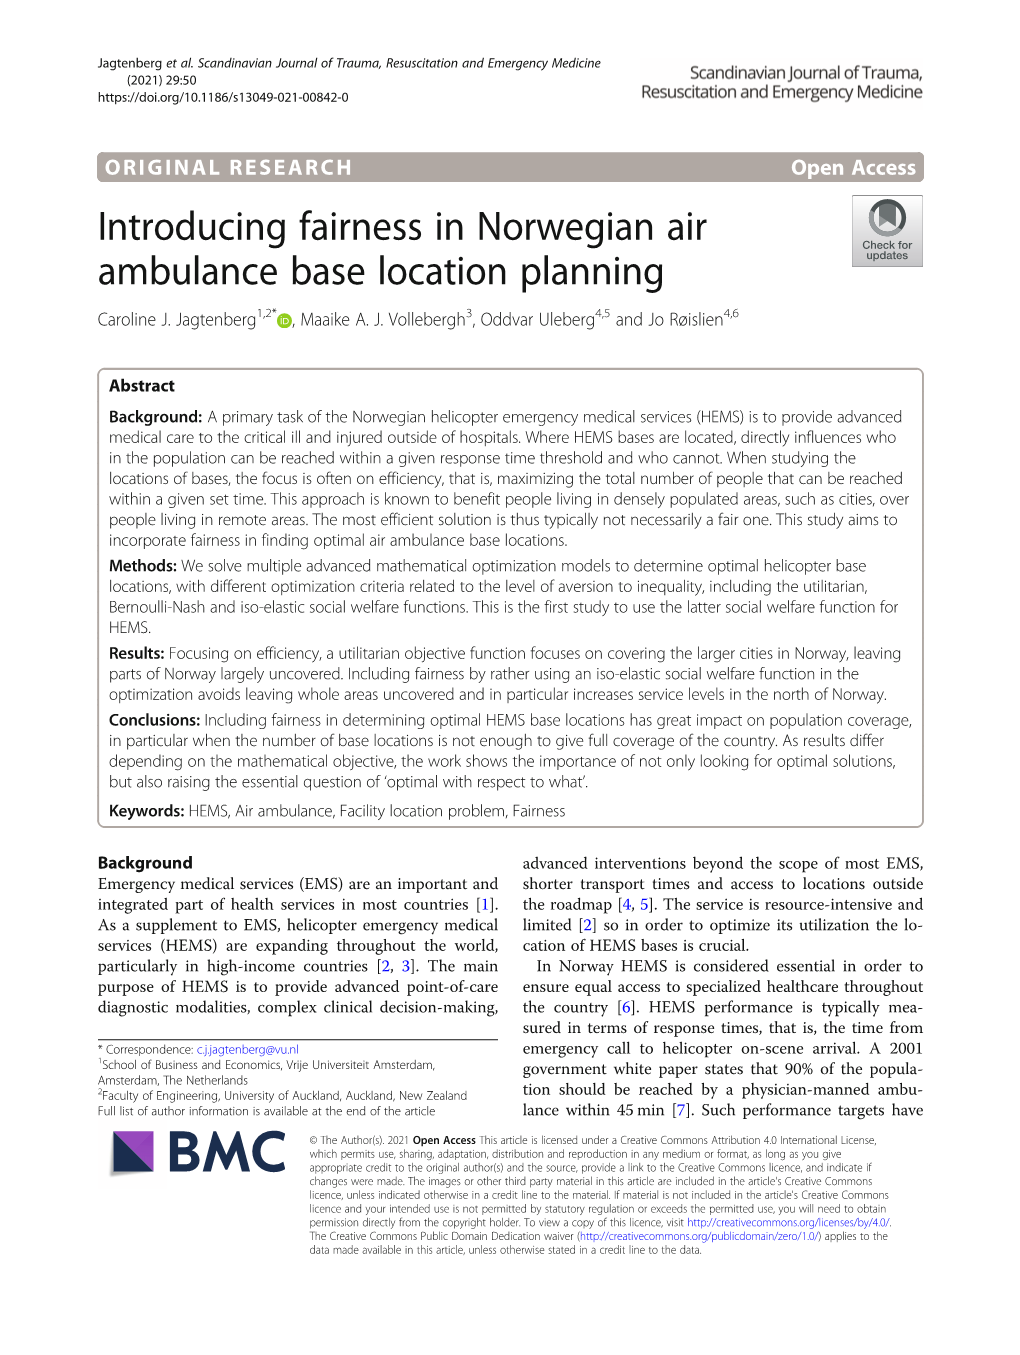 Introducing Fairness in Norwegian Air Ambulance Base Location Planning Caroline J